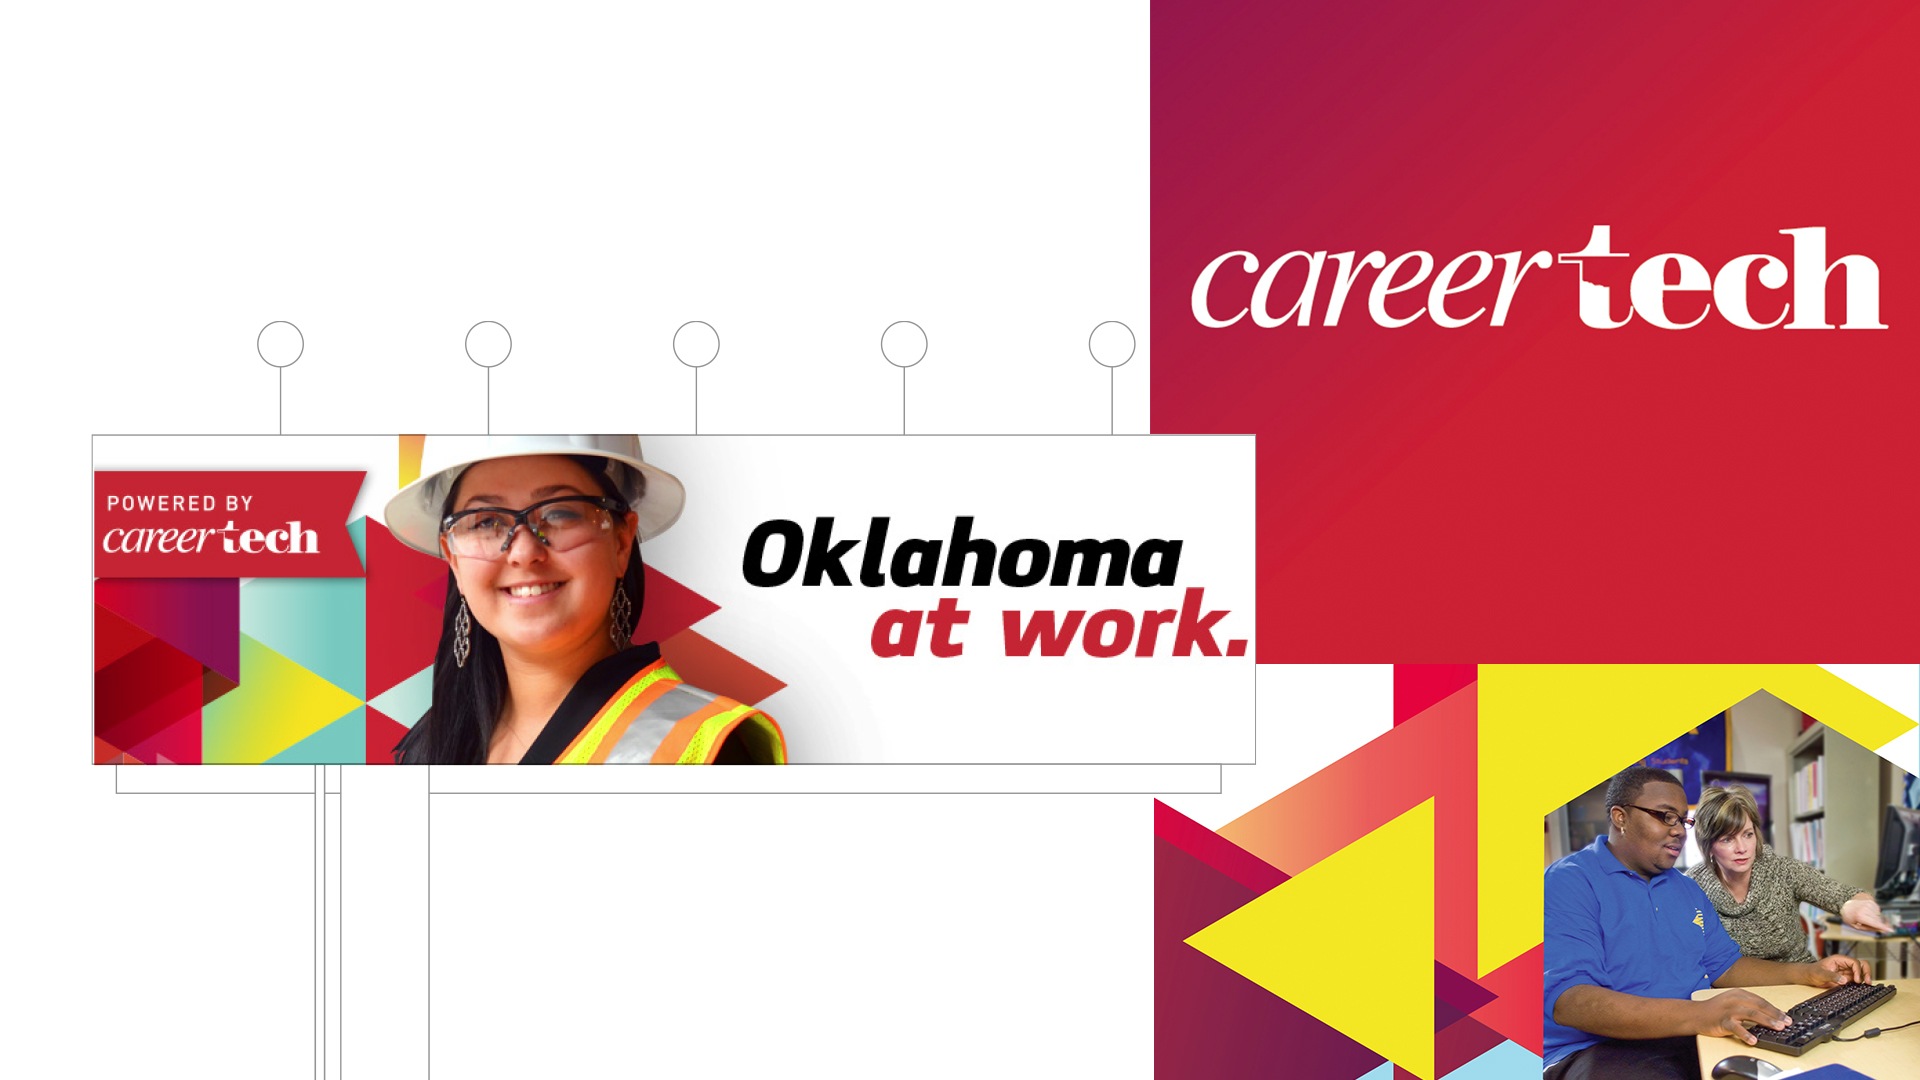 Branding and creative for CareerTech in Tulsa, Oklahoma